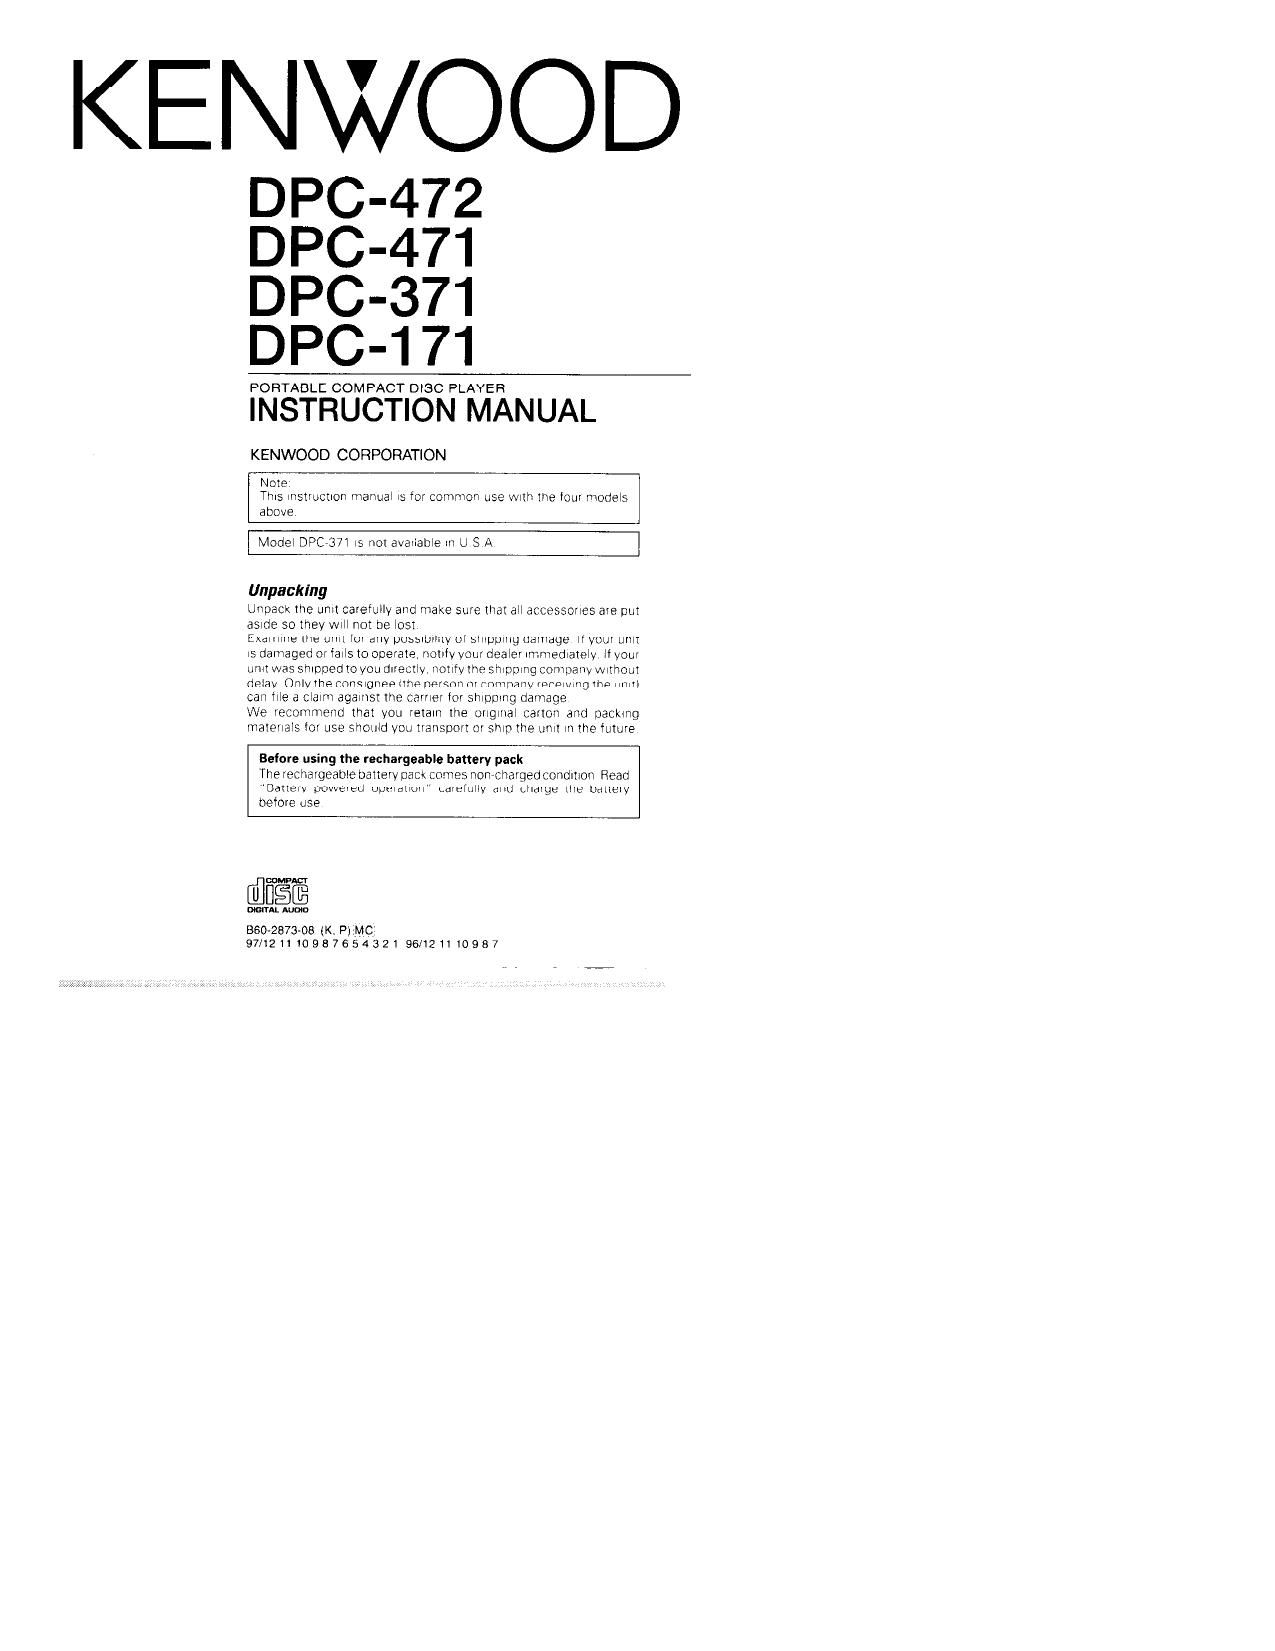 Kenwood DPC 472 Owners Manual